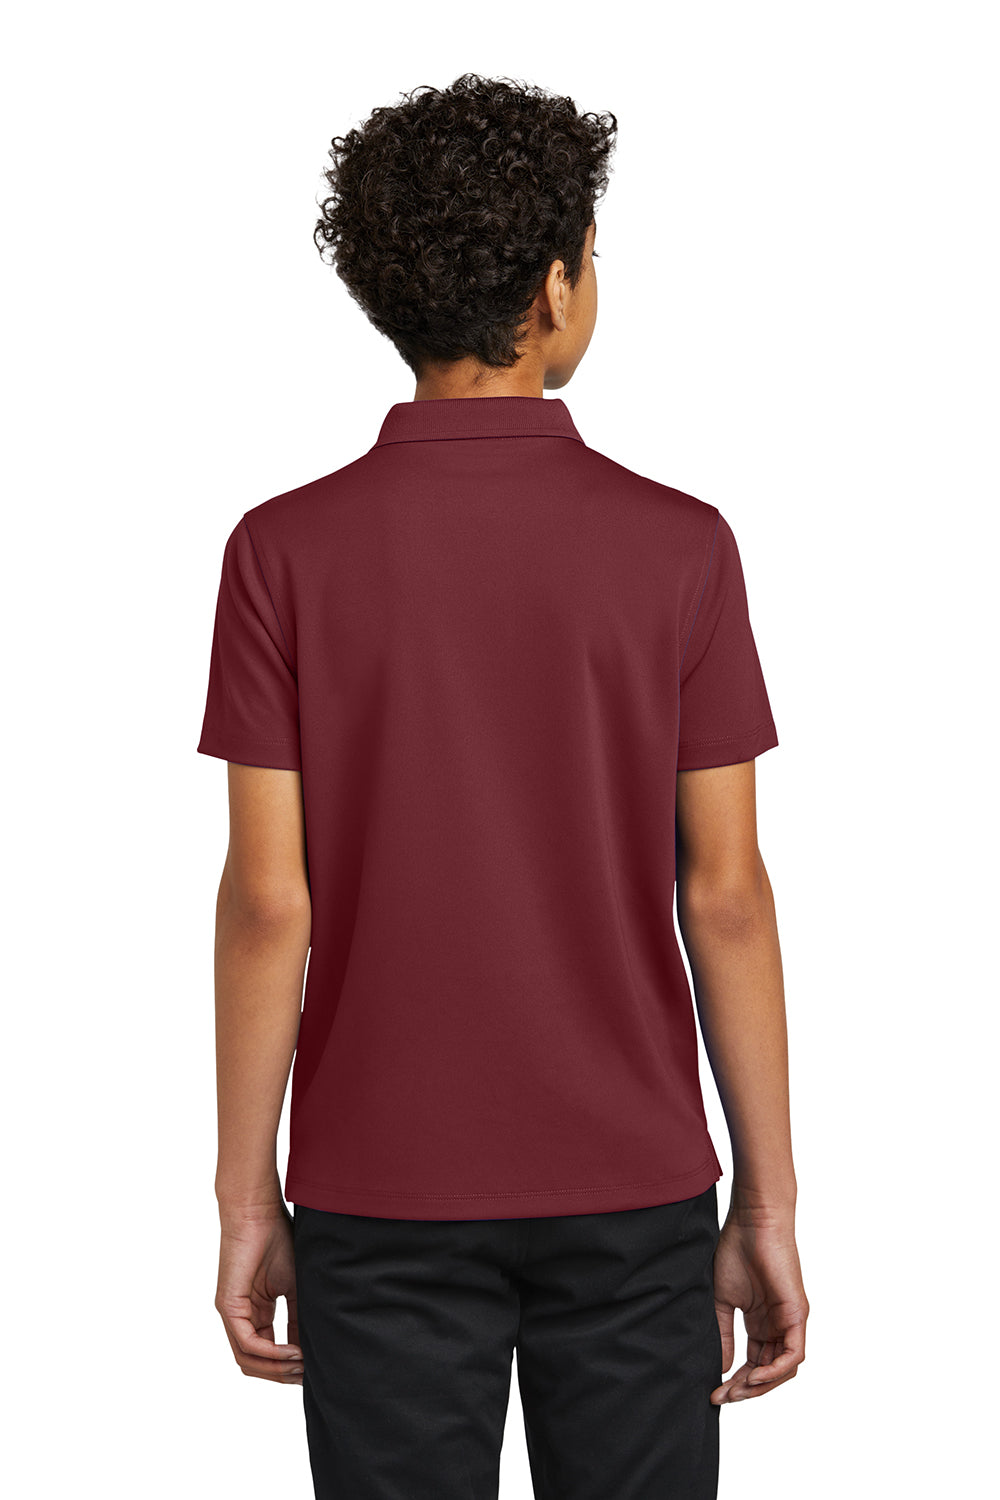 Port Authority Y110 Youth Dry Zone Moisture Wicking Short Sleeve Polo Shirt Burgundy Back